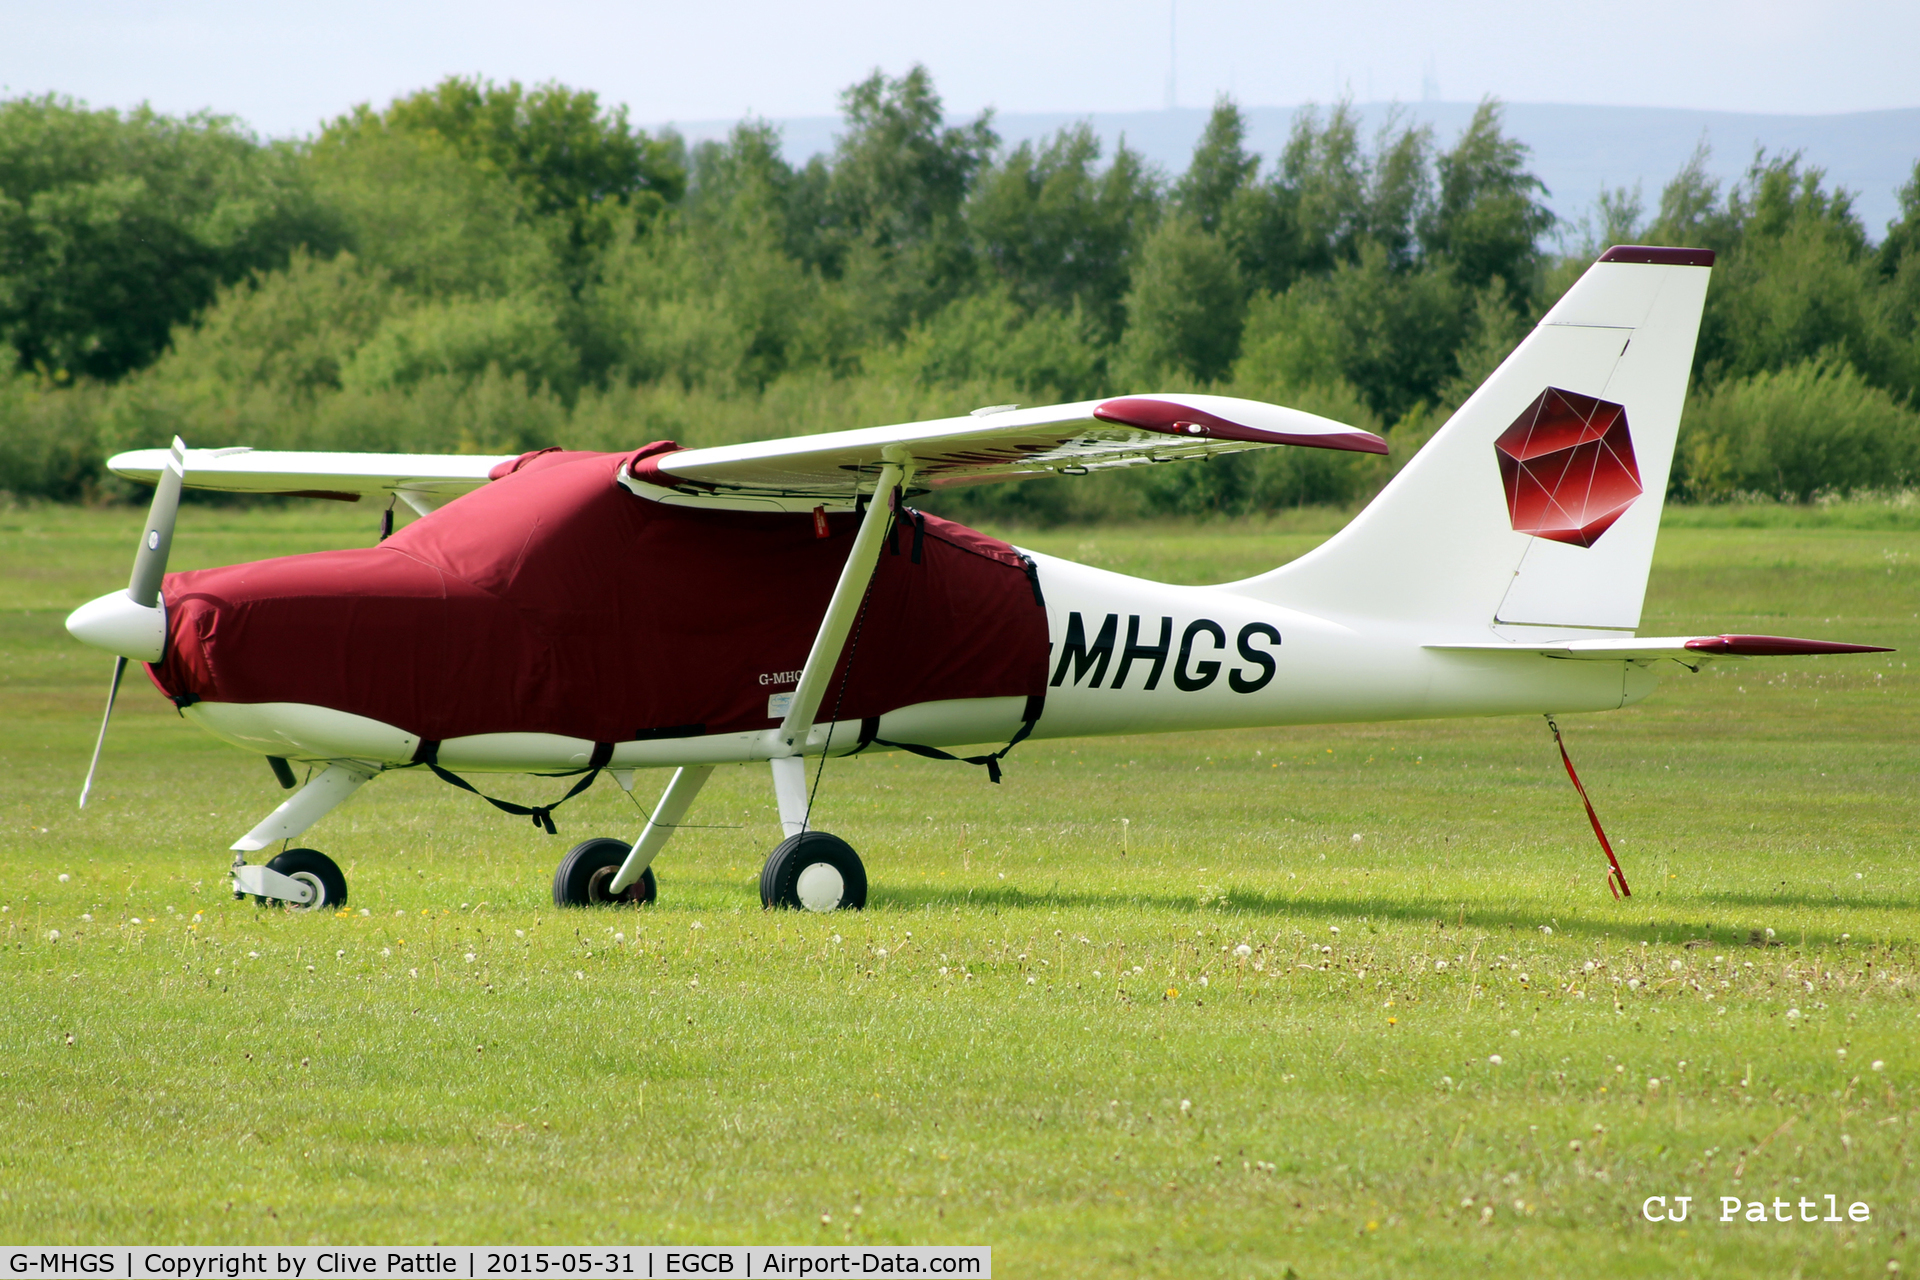 G-MHGS, 2004 Stoddard-Hamilton GlaStar C/N PFA 295-13473, Parked up in the sunshine at Barton airfield, Manchester - EGCB